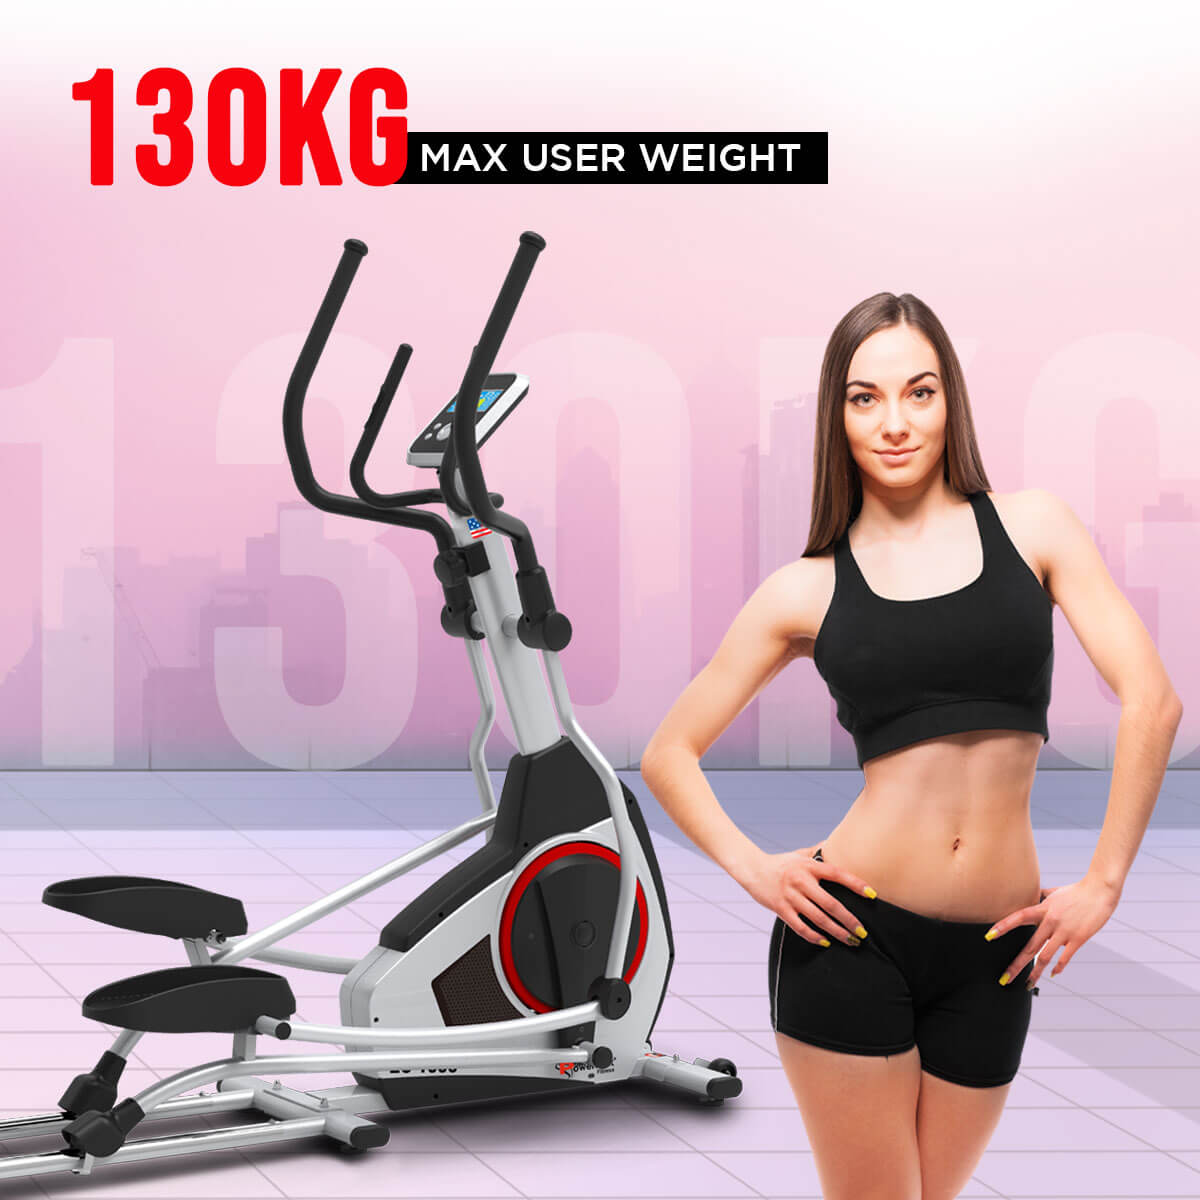 buy powermax ec-1000 semi-commercial elliptical cross trainer with magnetic resistance